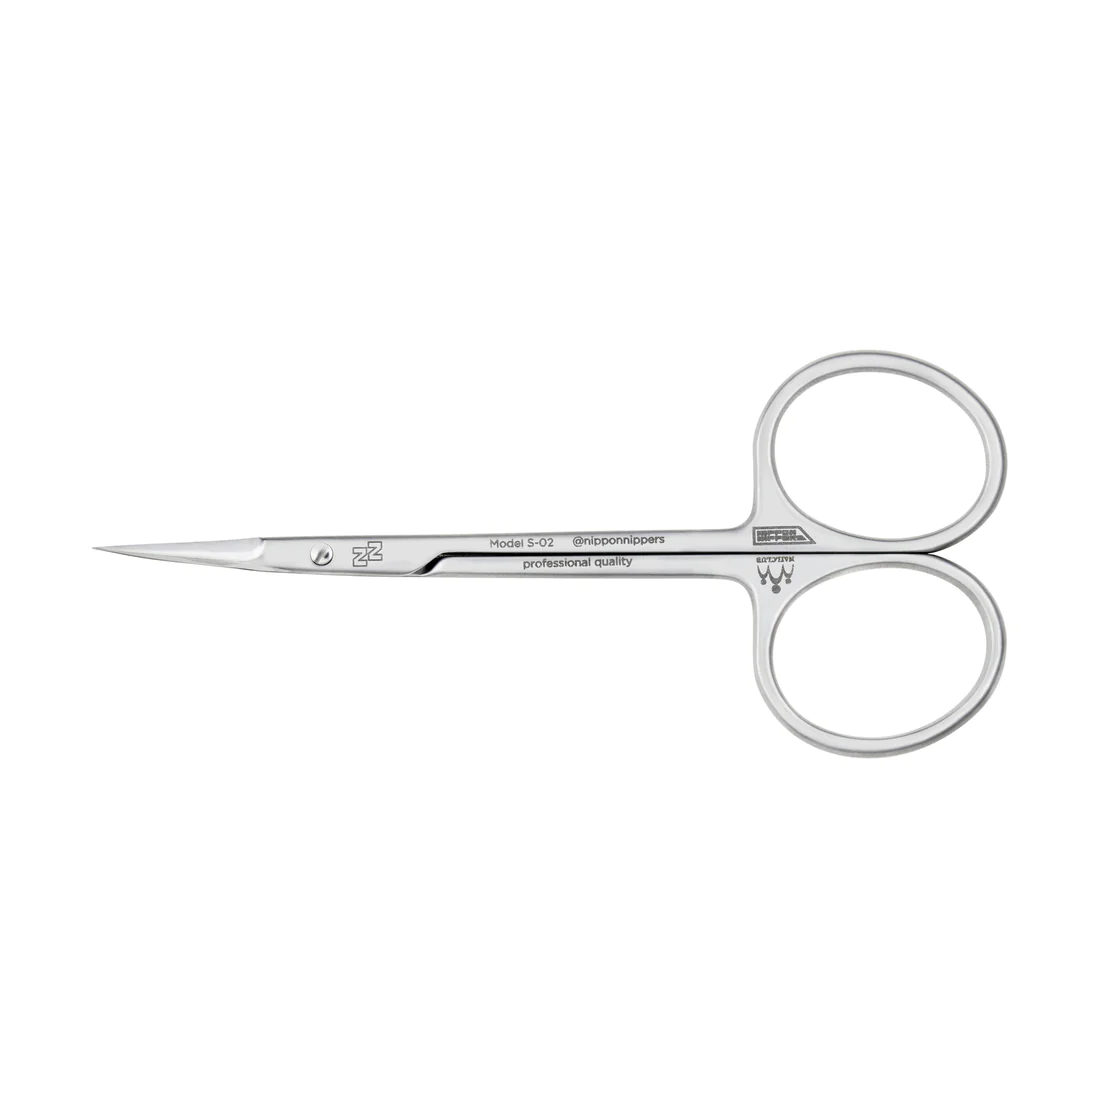 NIPPON NIPPERS Cuticle scissors S-02